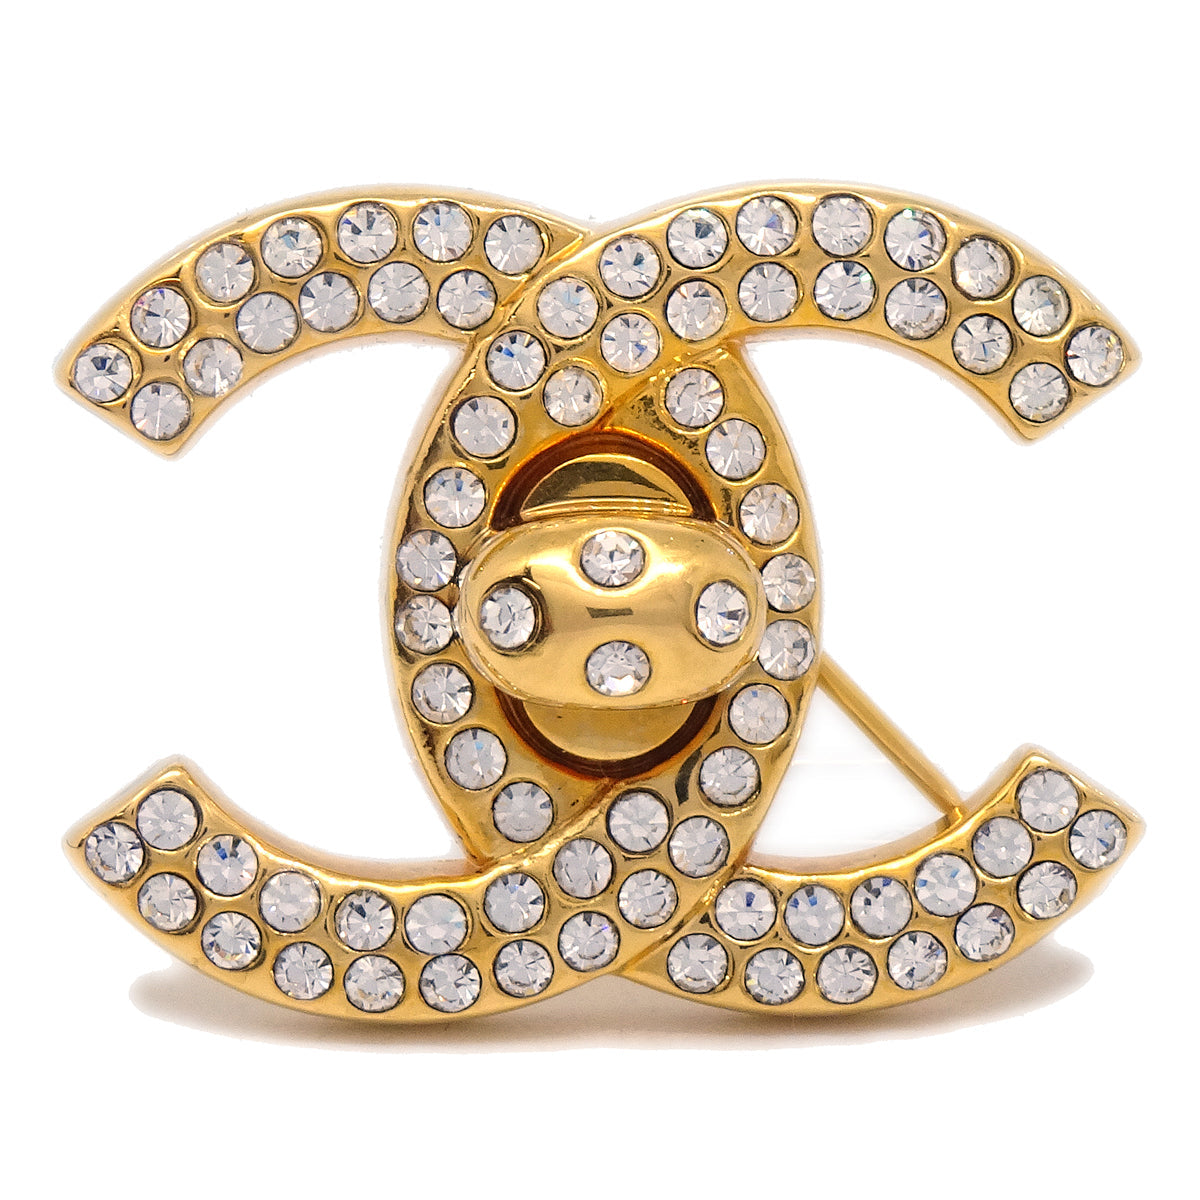 Chanel Brooch Pin Gold 96P